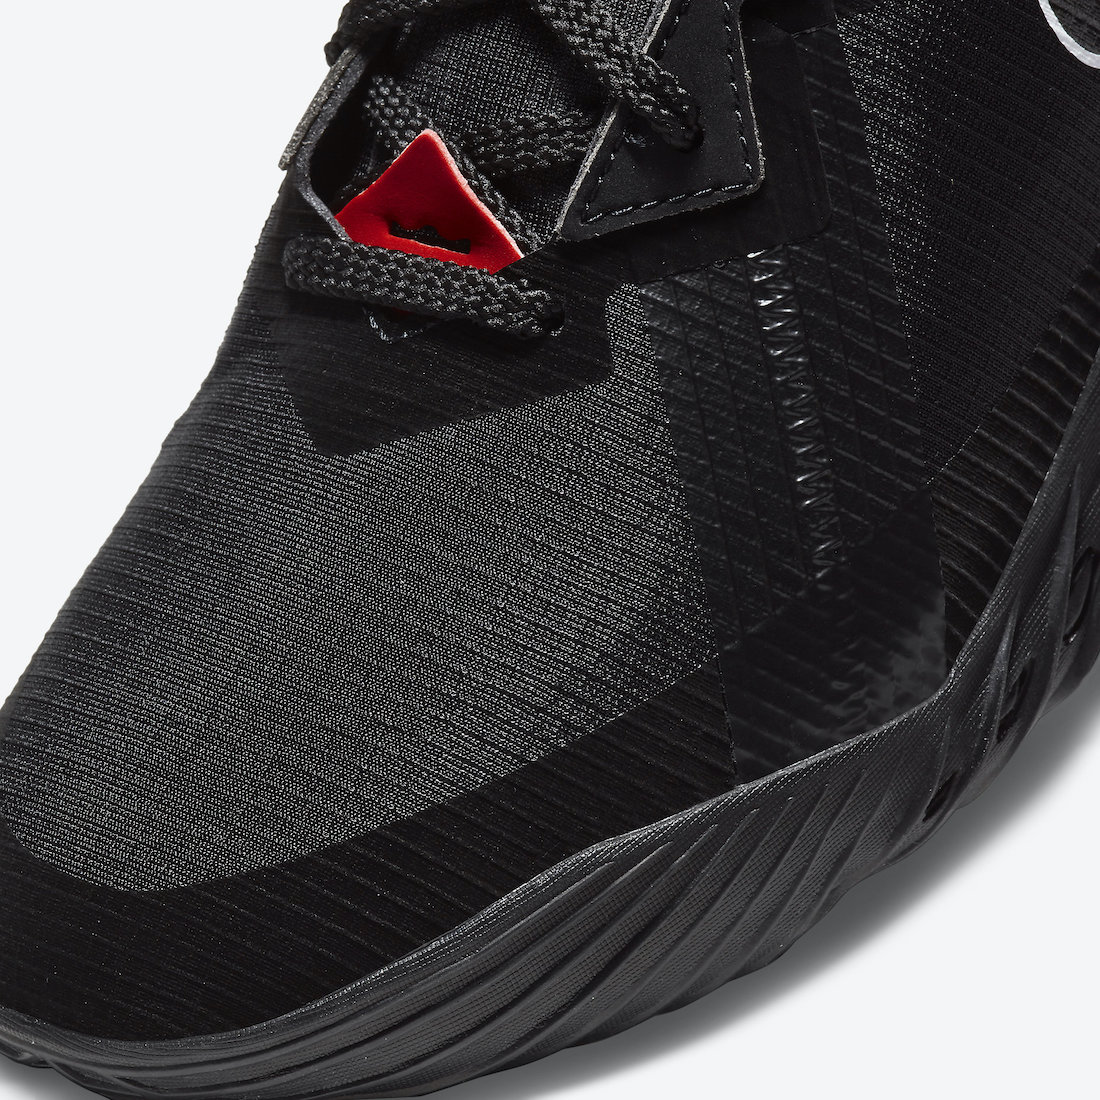 Nike LeBron 18 Low Black University Red CV7562-001 Release Date Info